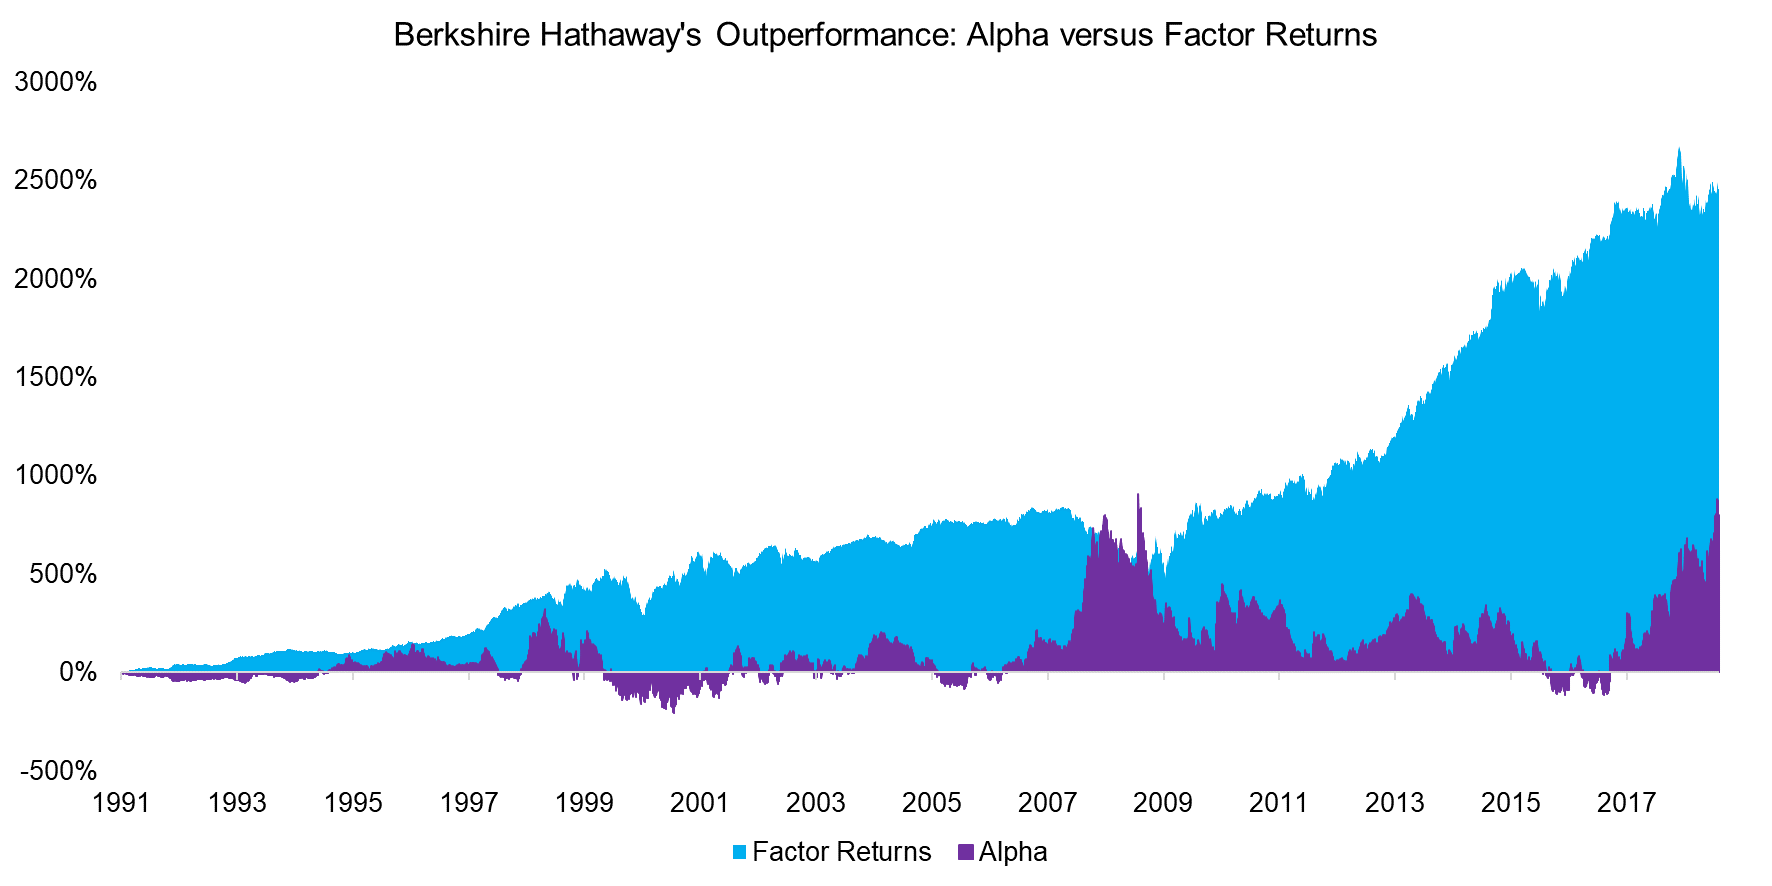 Berkshire Hathaway's Outperformance Alpha versus Factor Returns